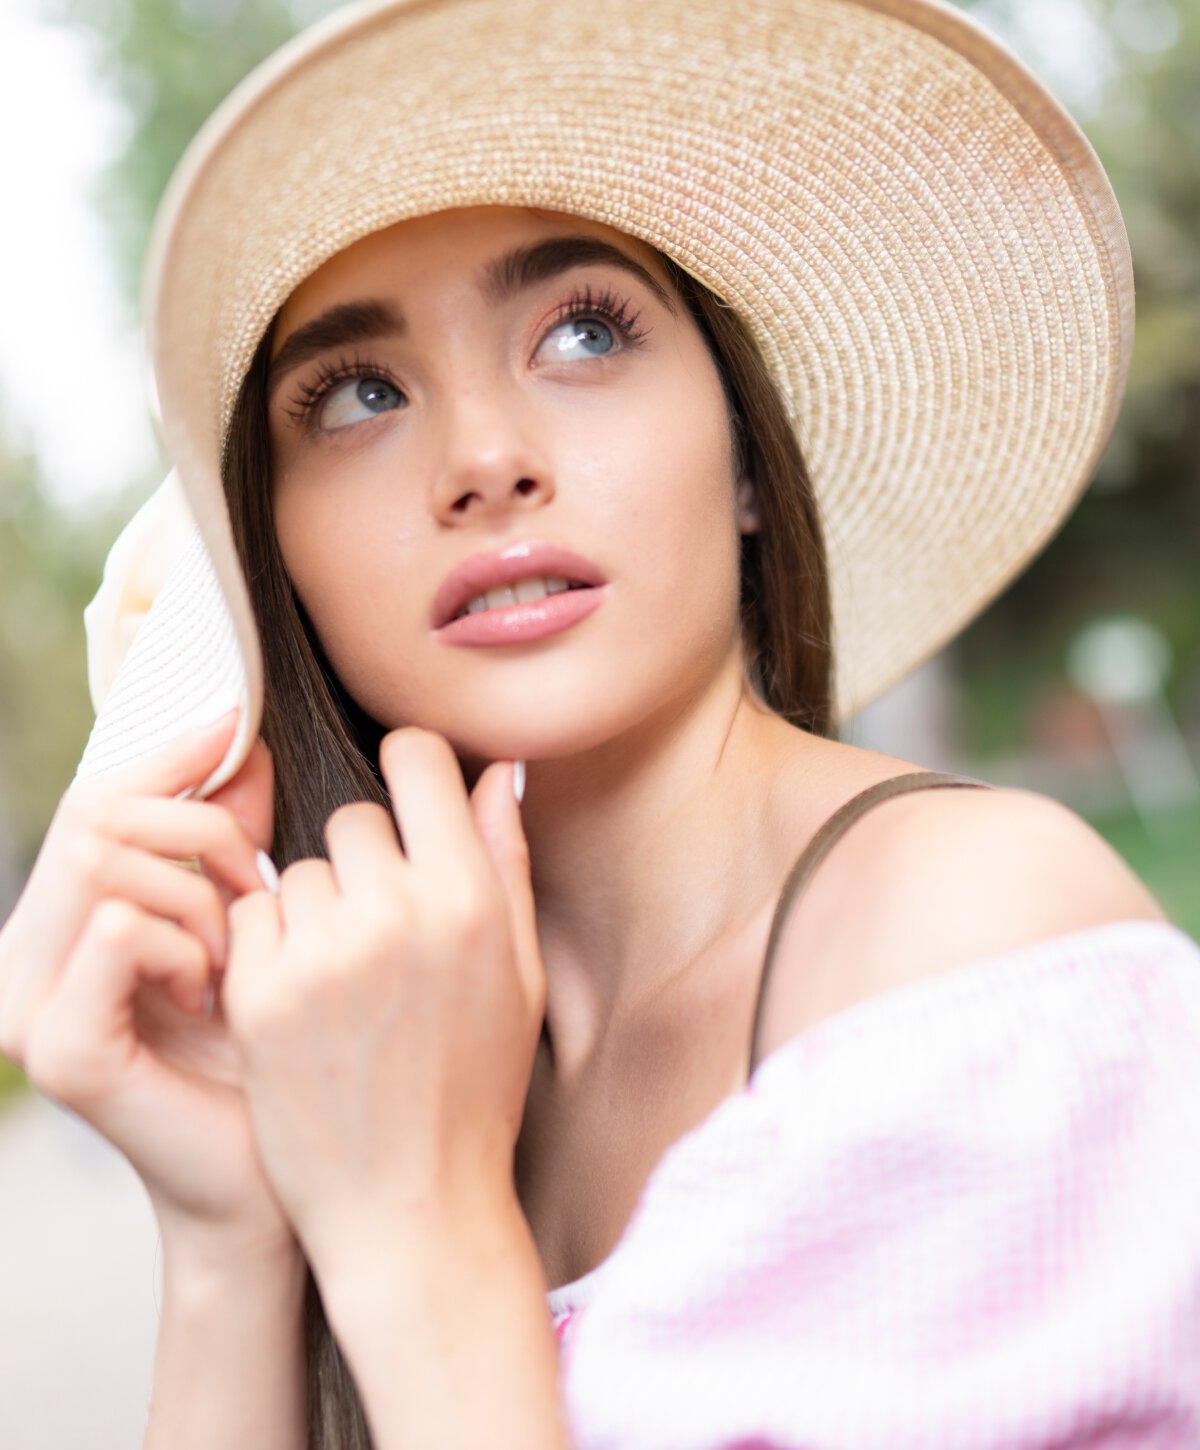 Carolina med spa model with tan hat